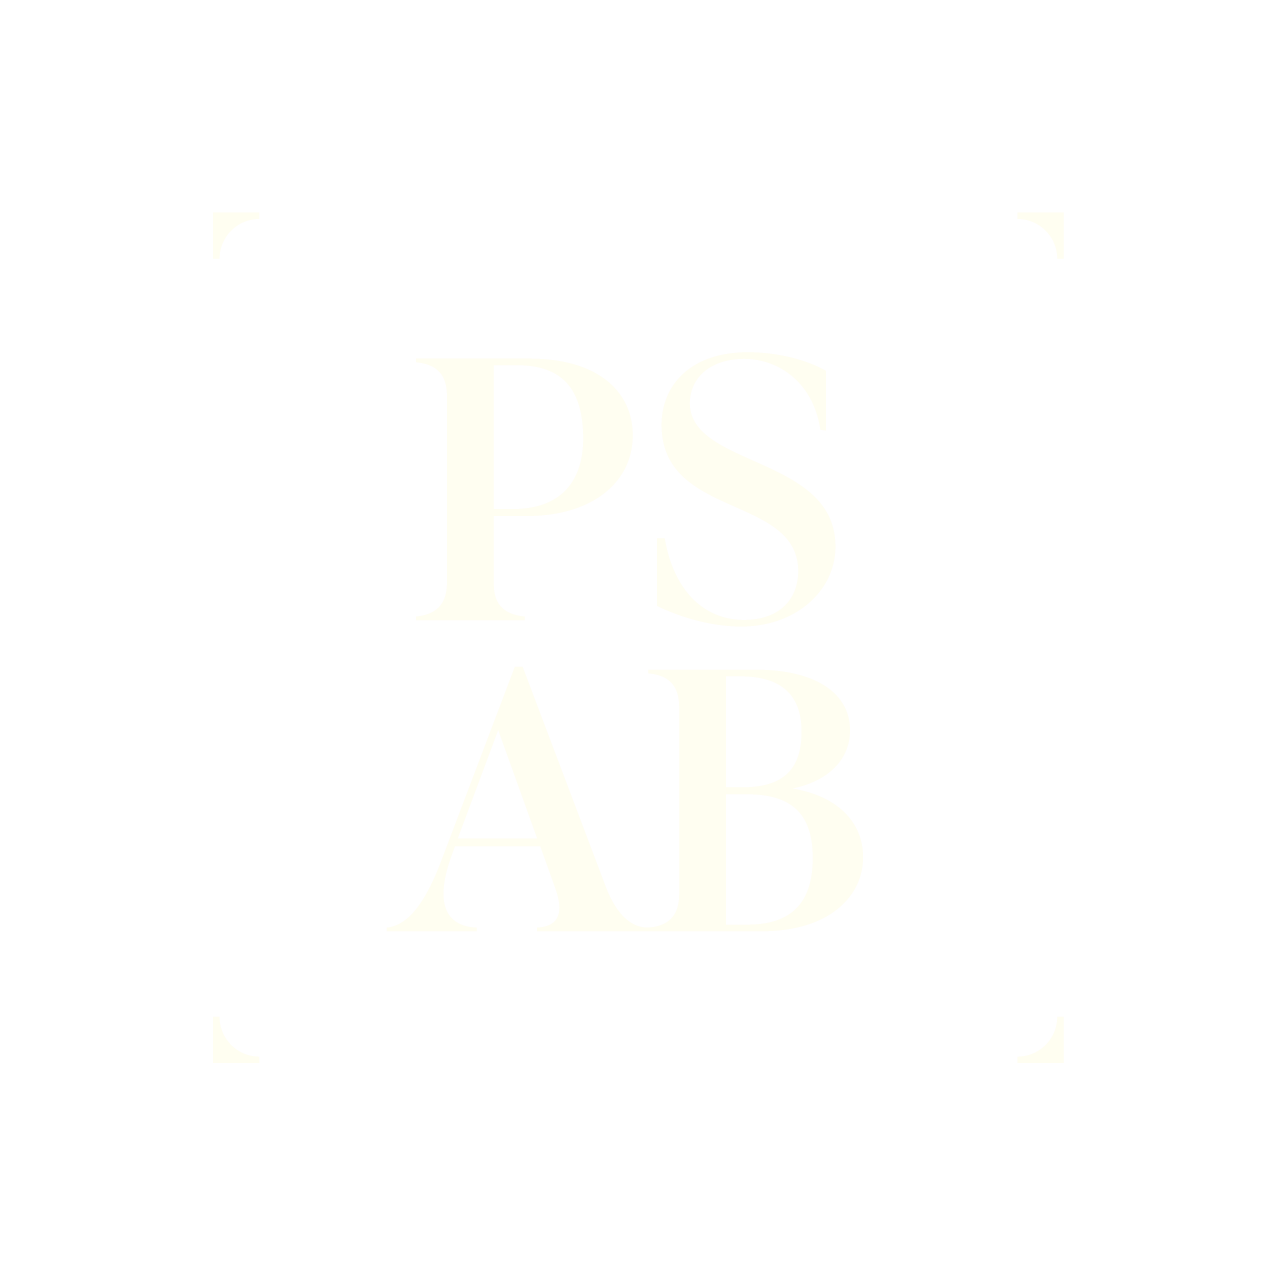 PSAB Public Sector Advisory Board